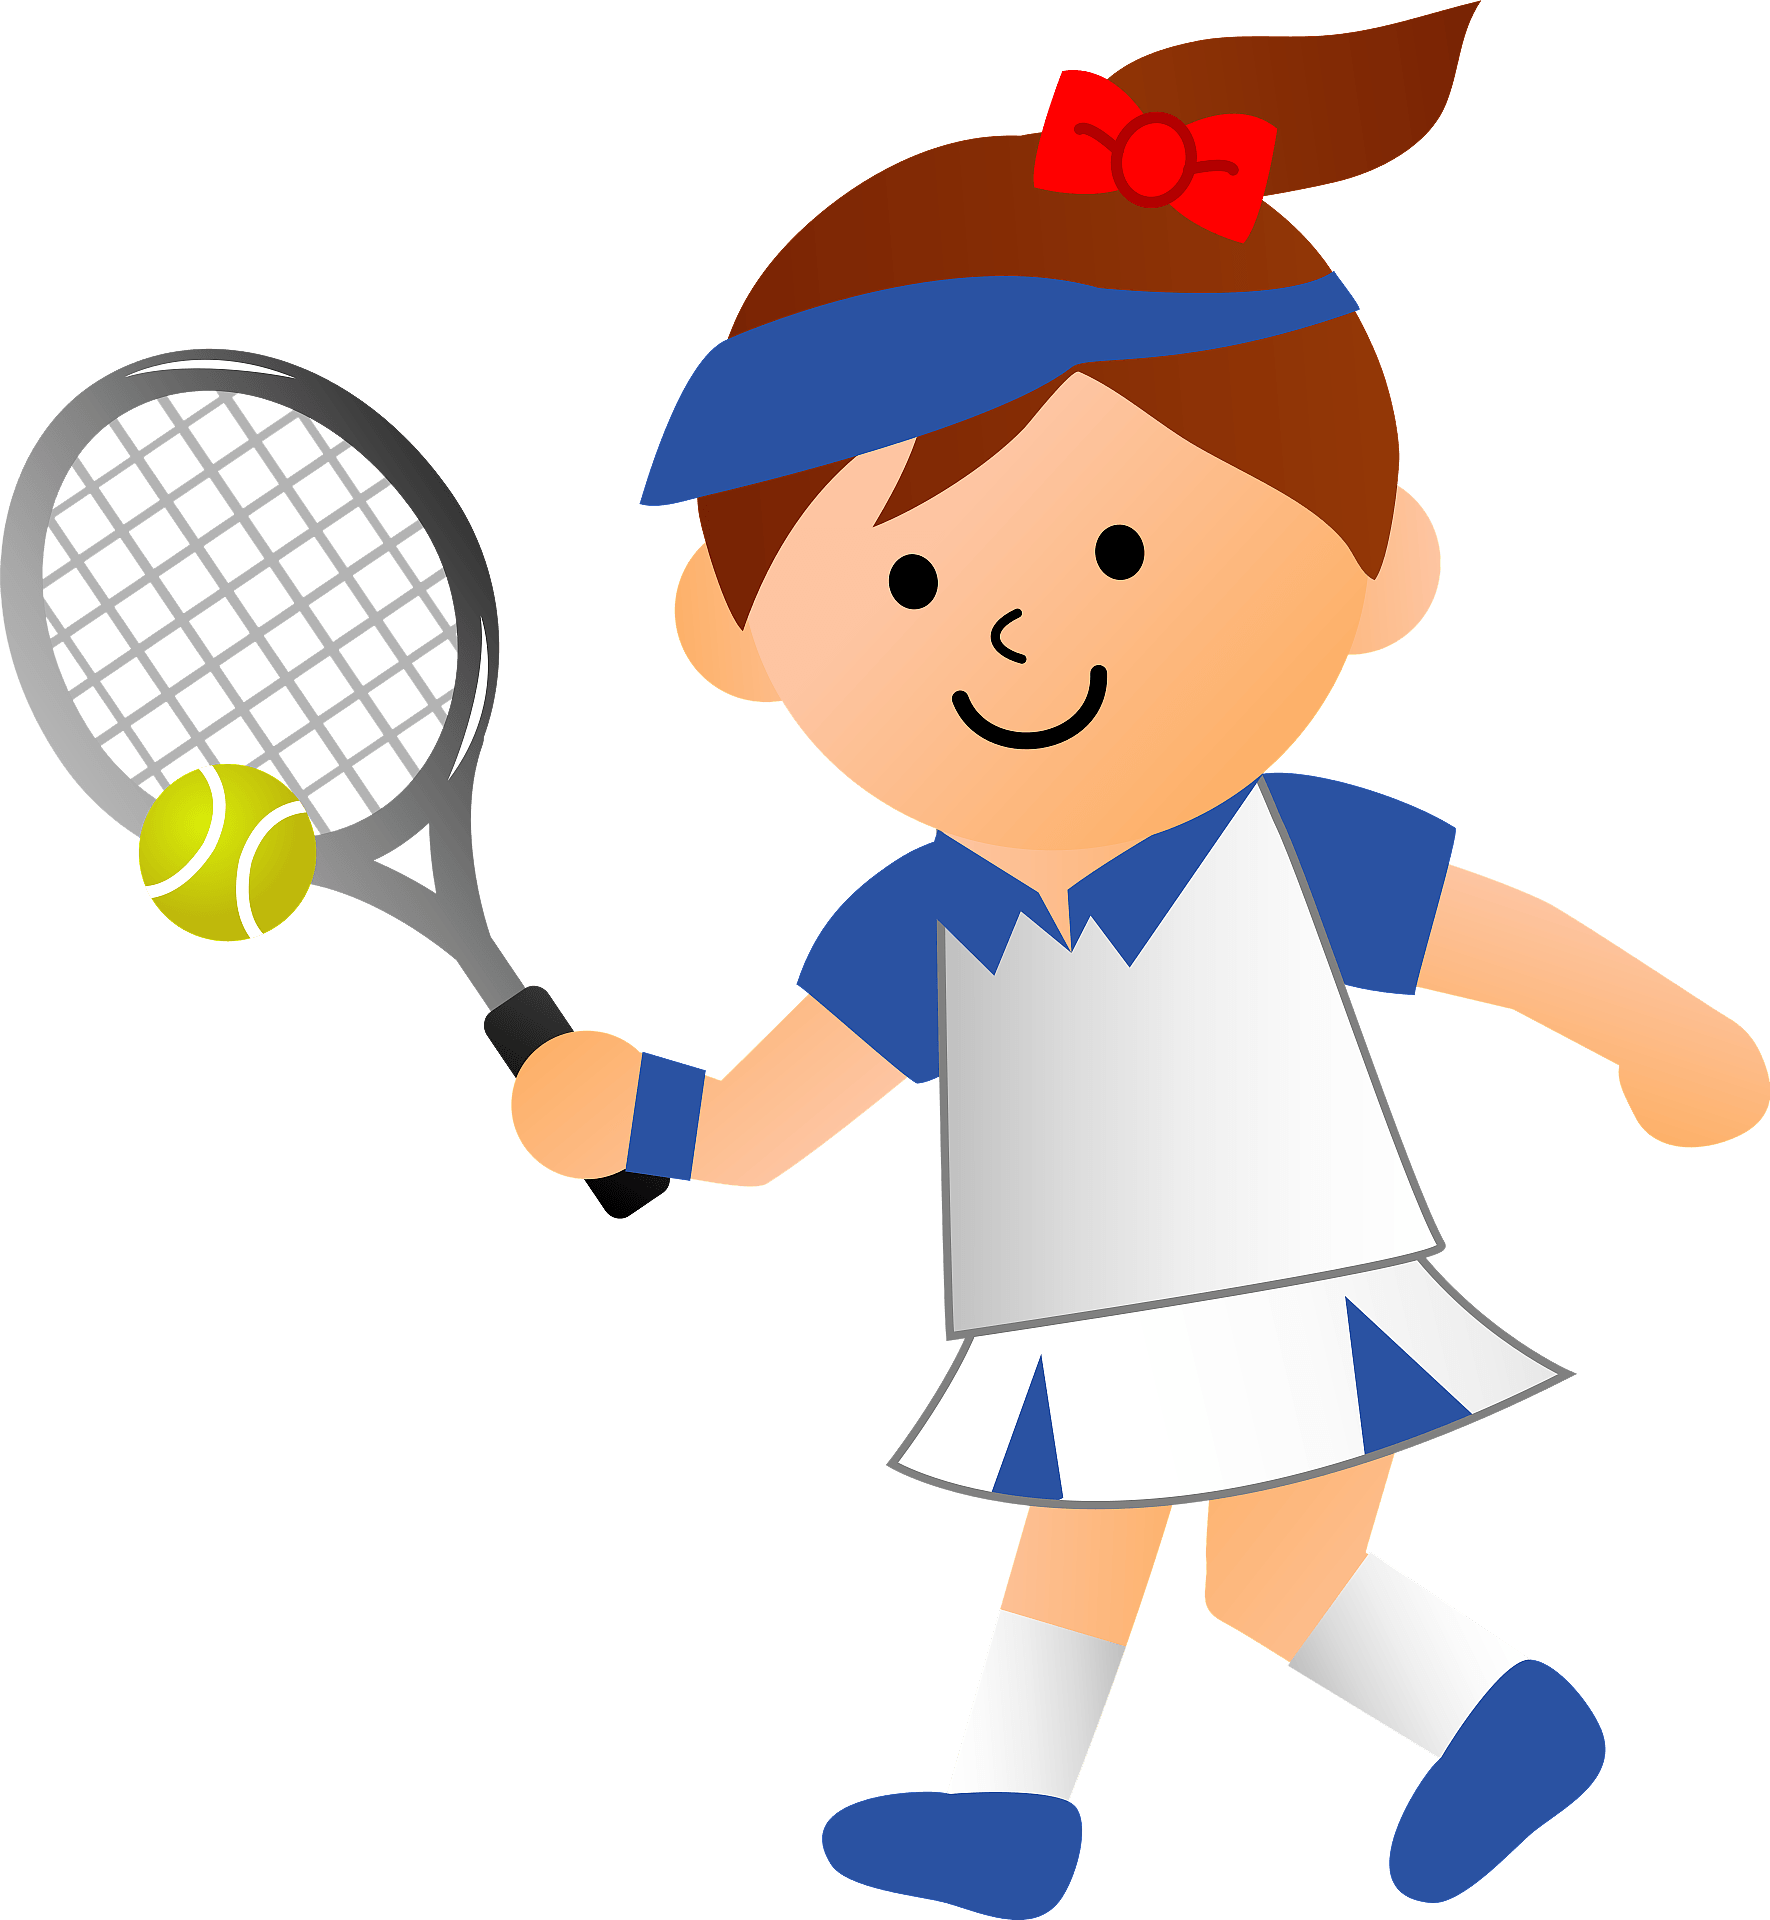 Теннис дети. Теннис дети вектор. Теннис дети на прозрачном фоне. Теннис картинки для детей. I can play tennis